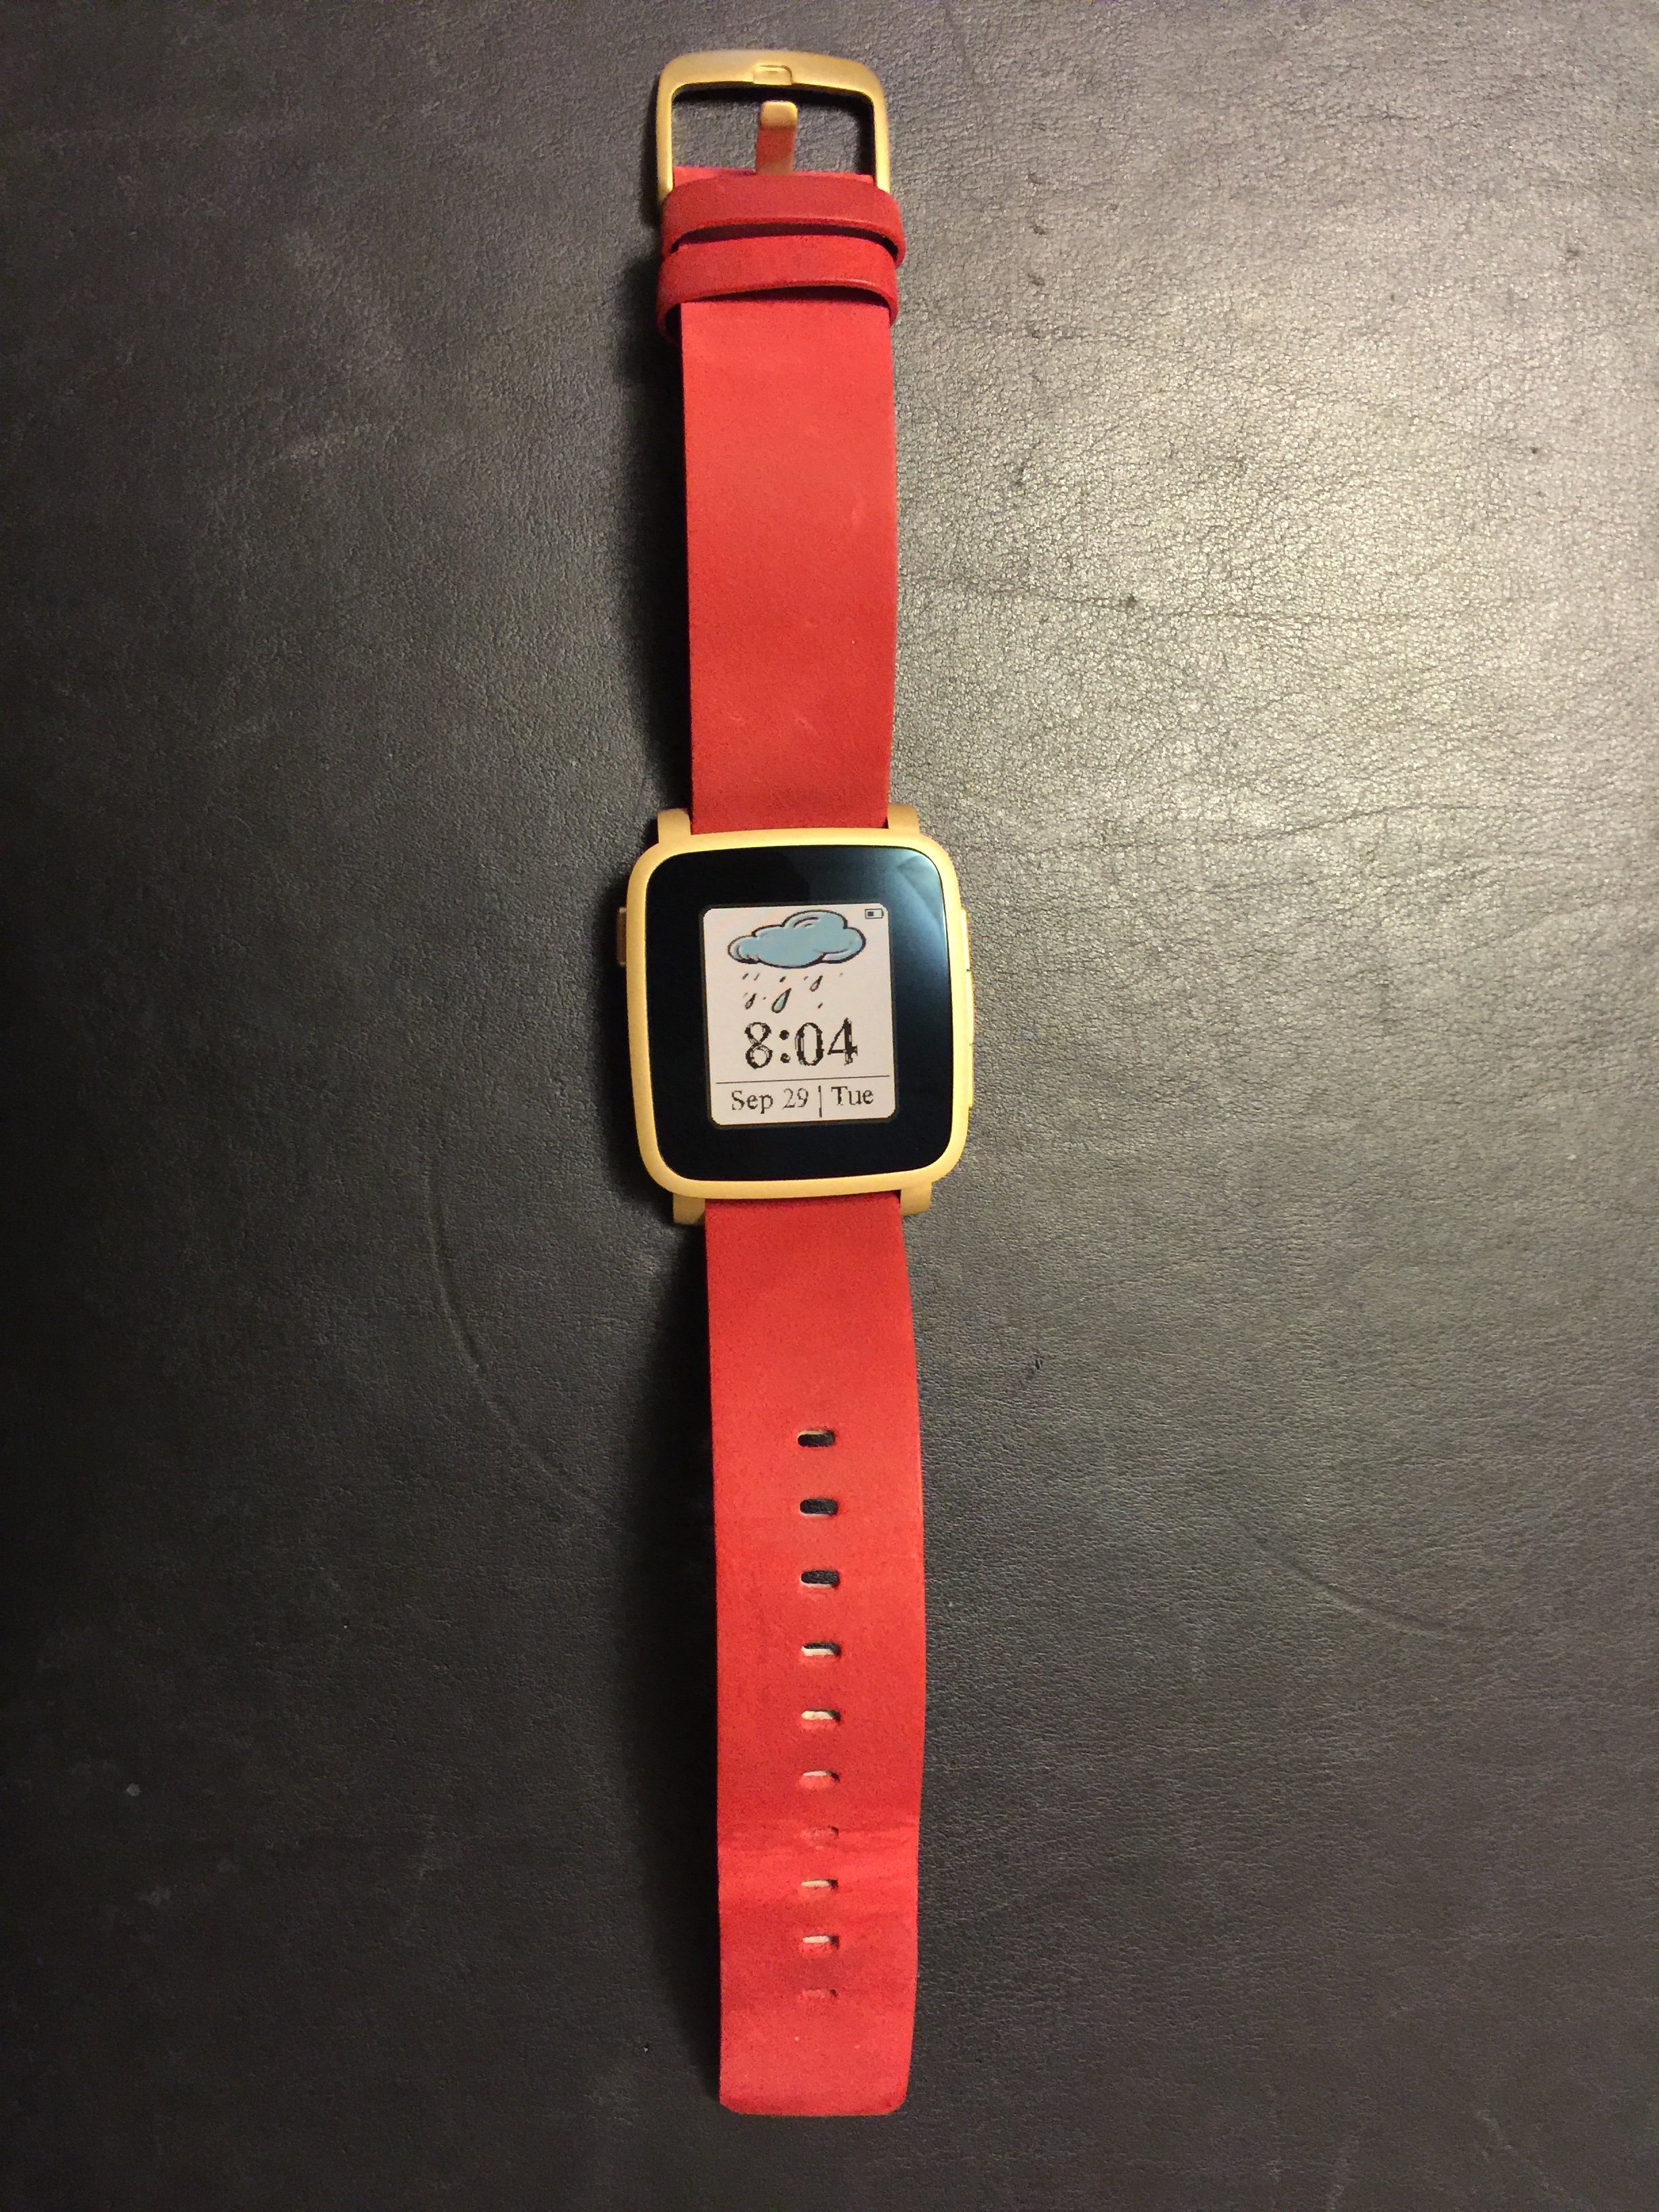 pebble time steel smartwatch